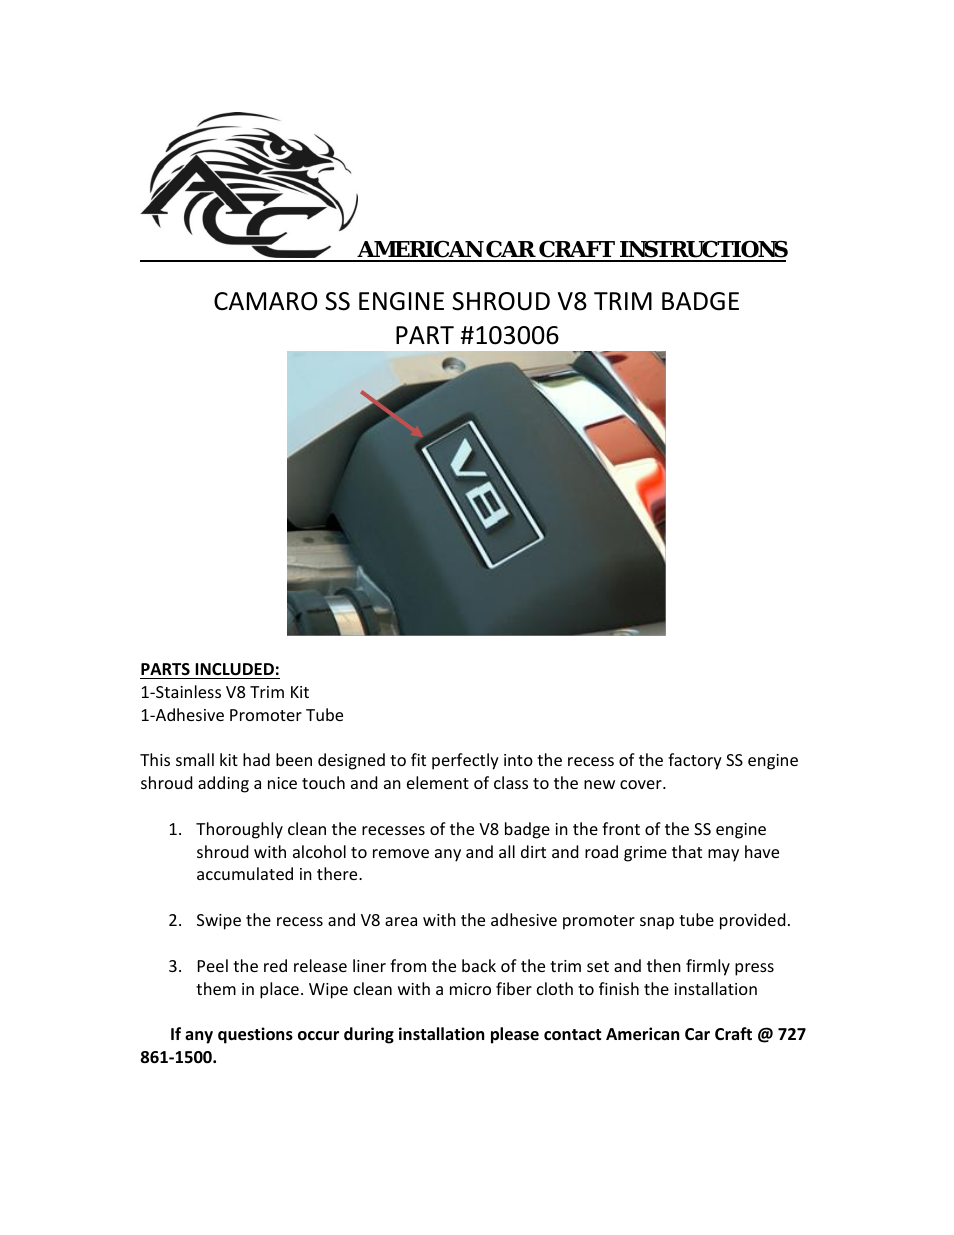 Camaro Factory Shroud Trim Polished V8 Kit 3Pc 2010-2013